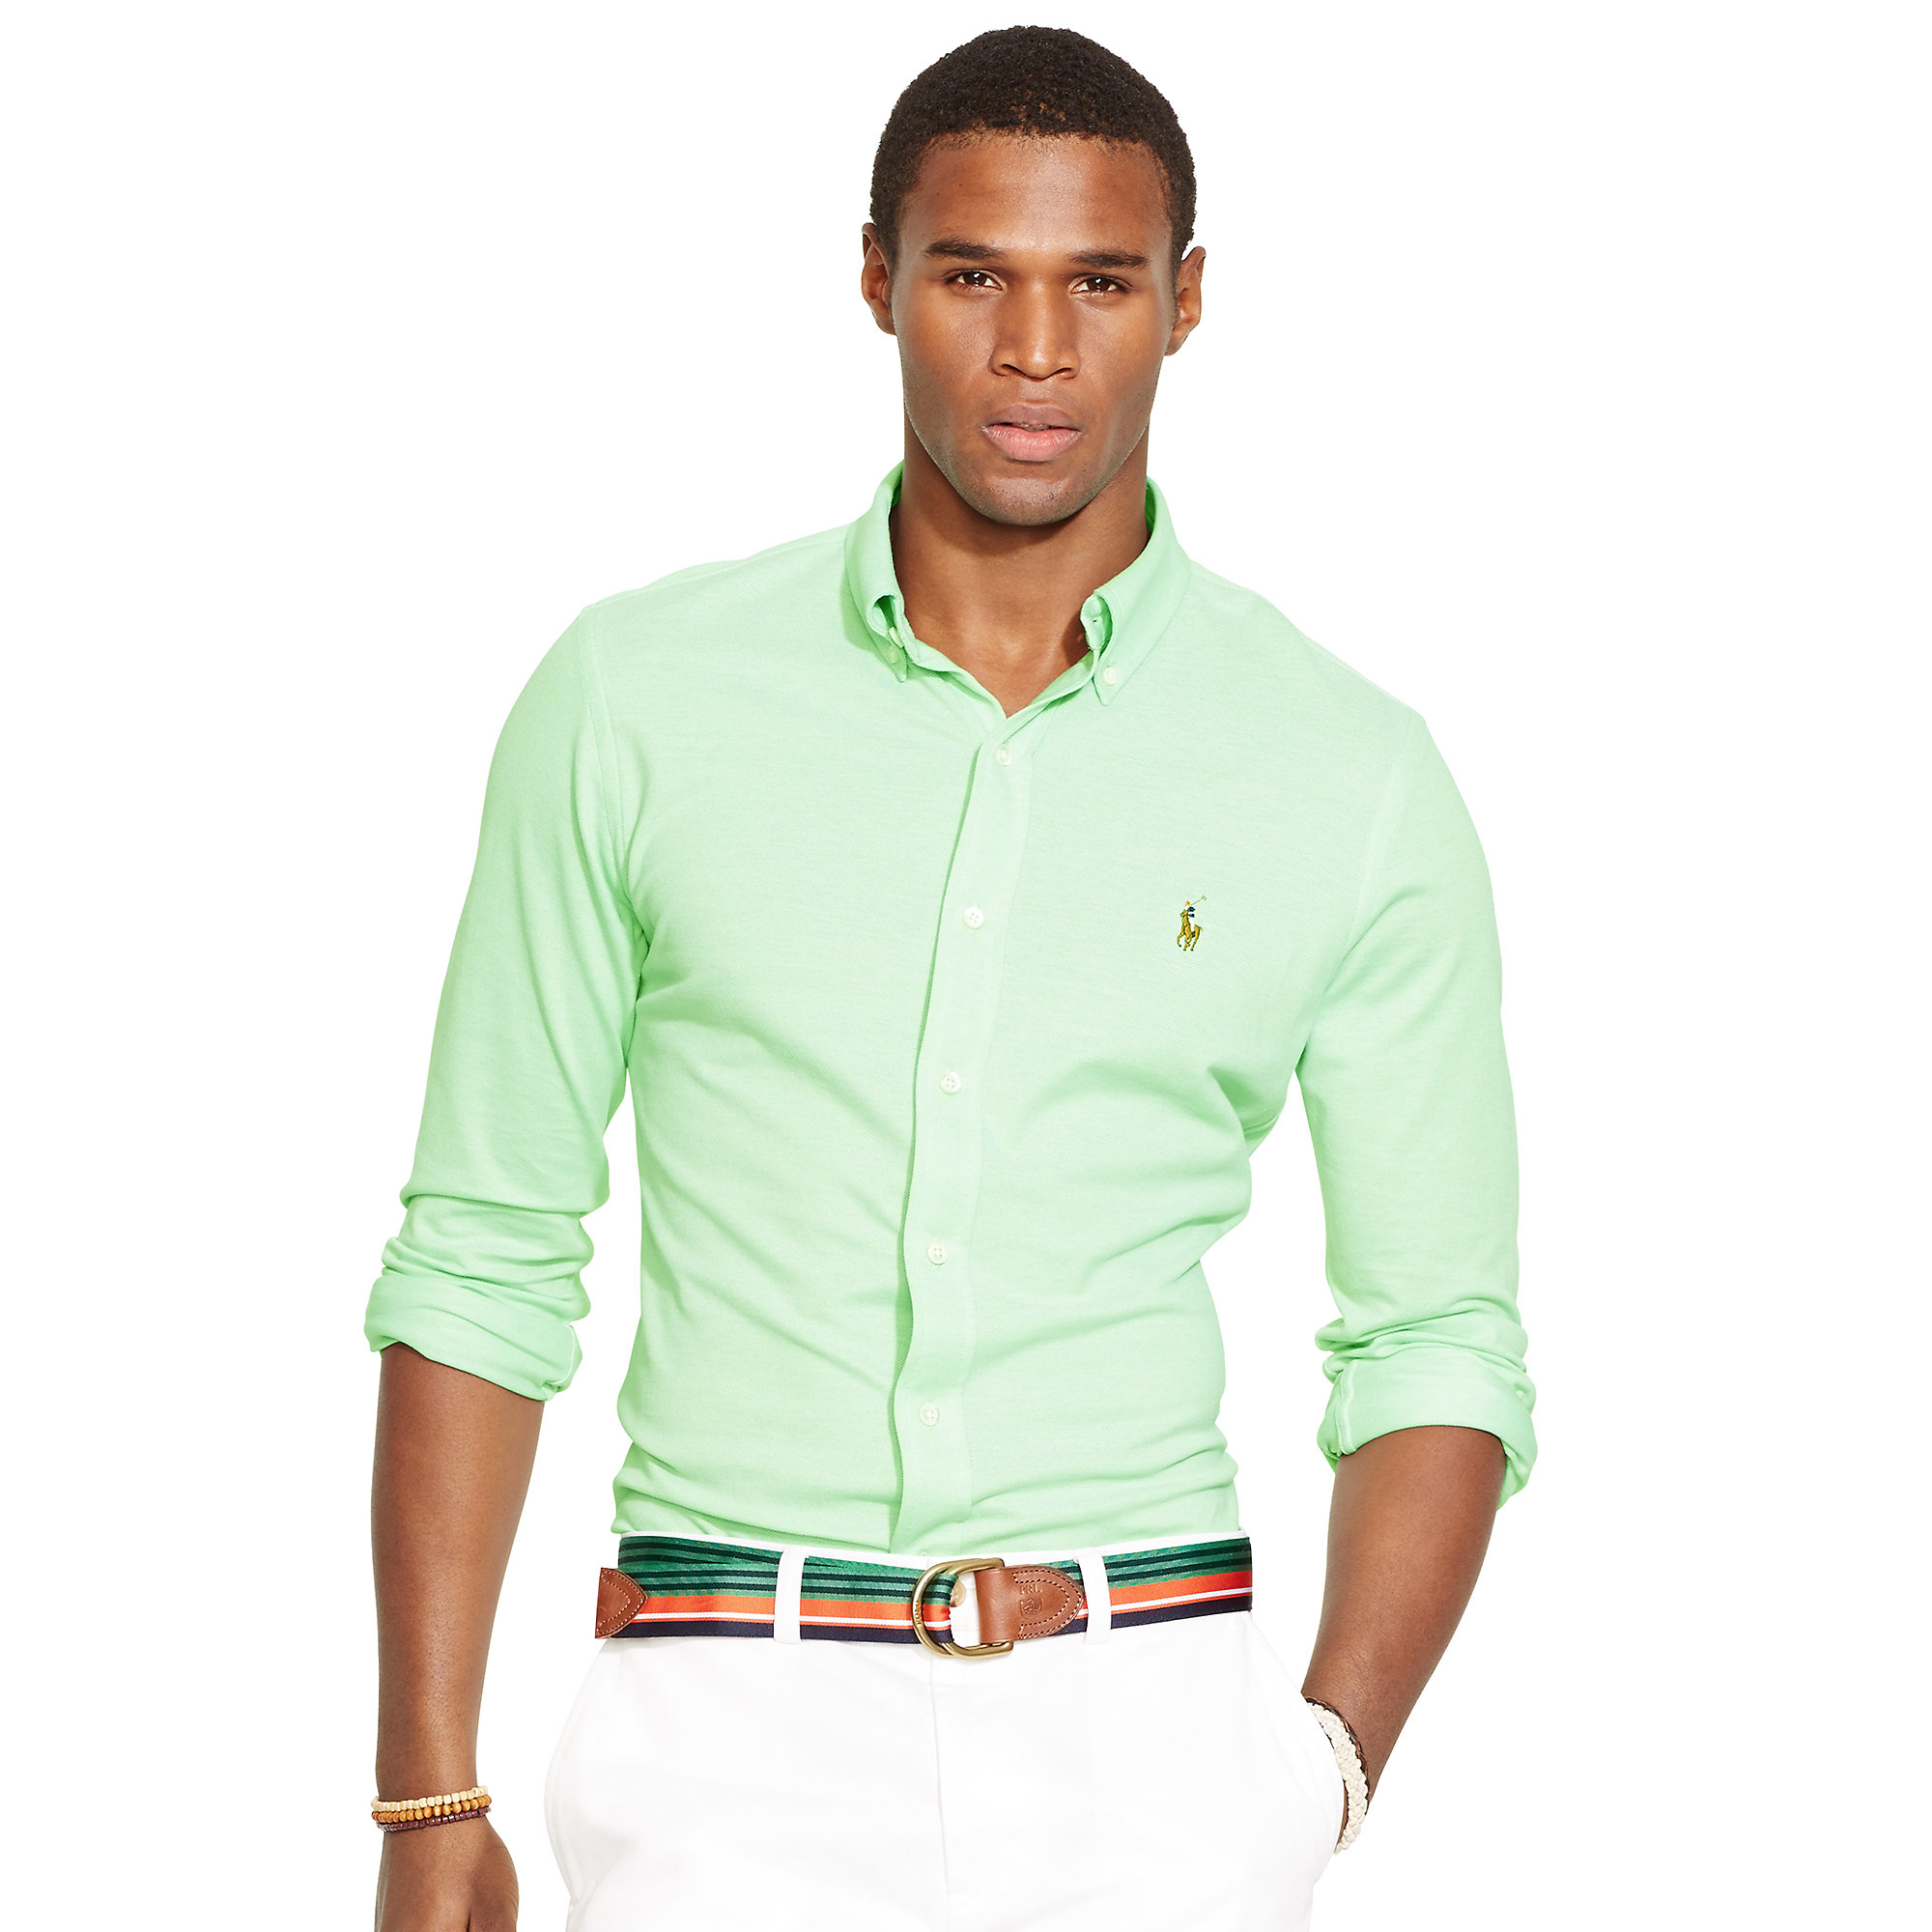 Polo Ralph Lauren Knit Oxford Shirt in Green for Men - Lyst